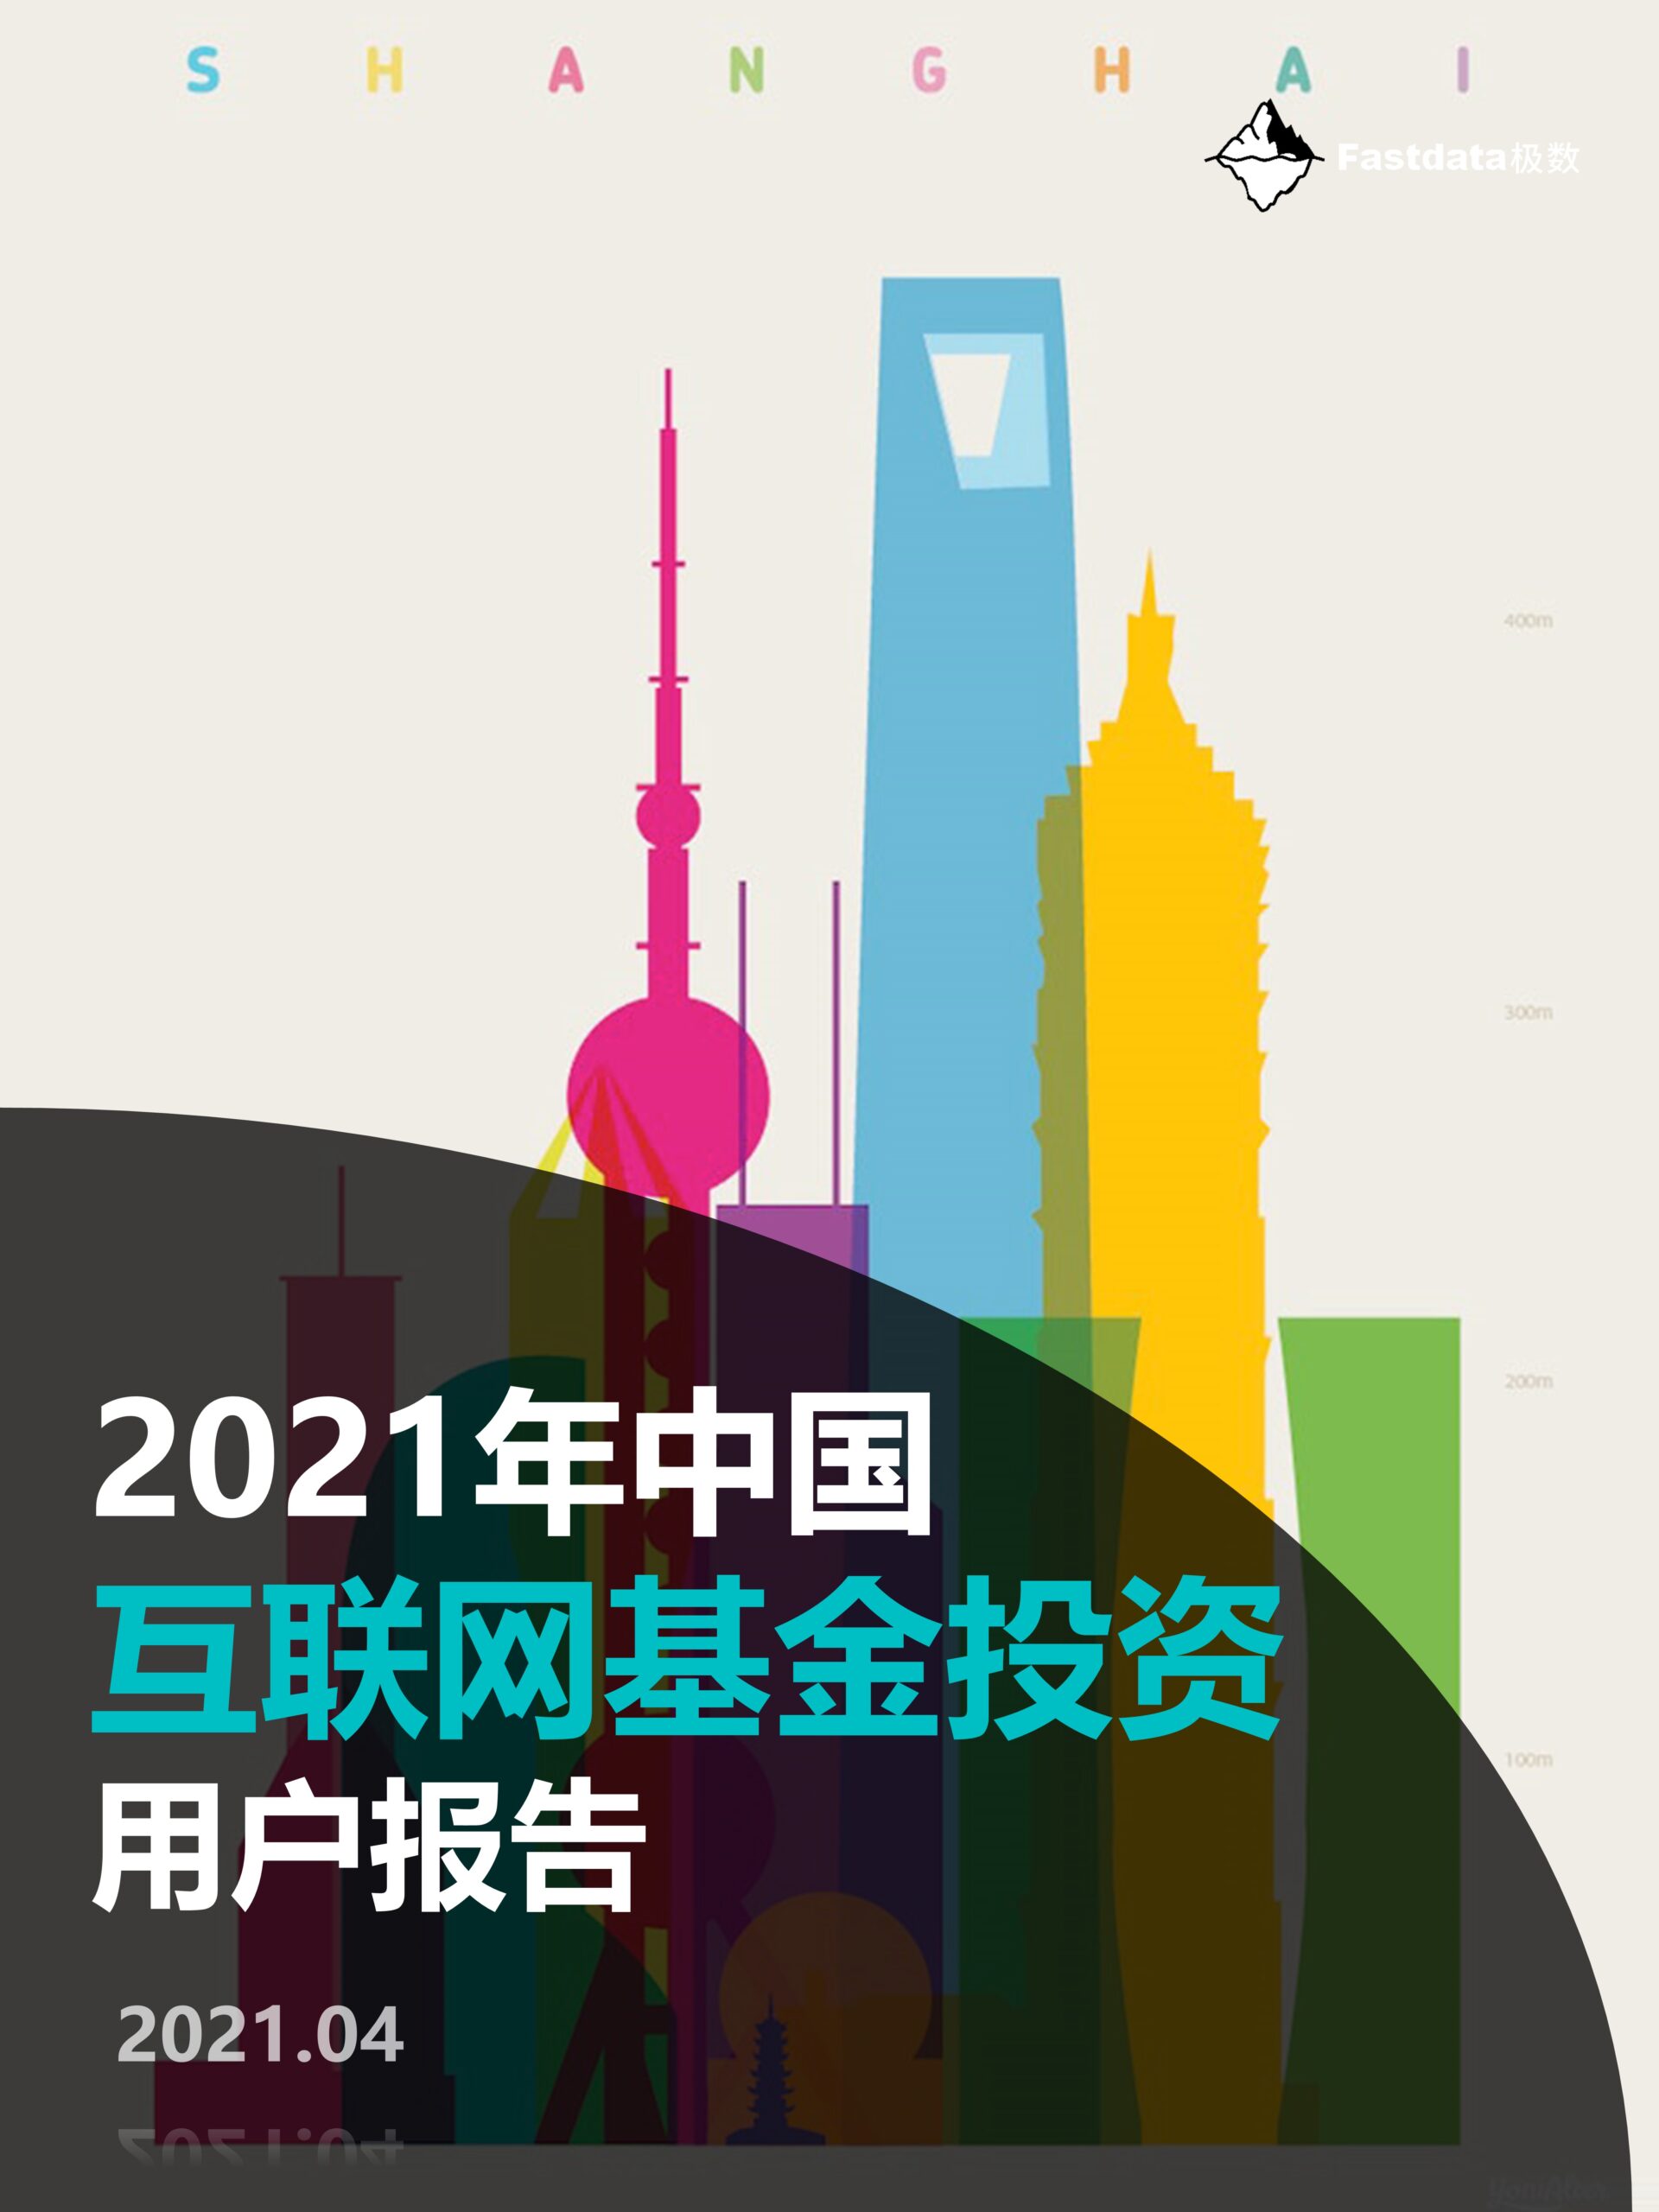 Fastdata极数：2021年中国互联网基金投资用户报告